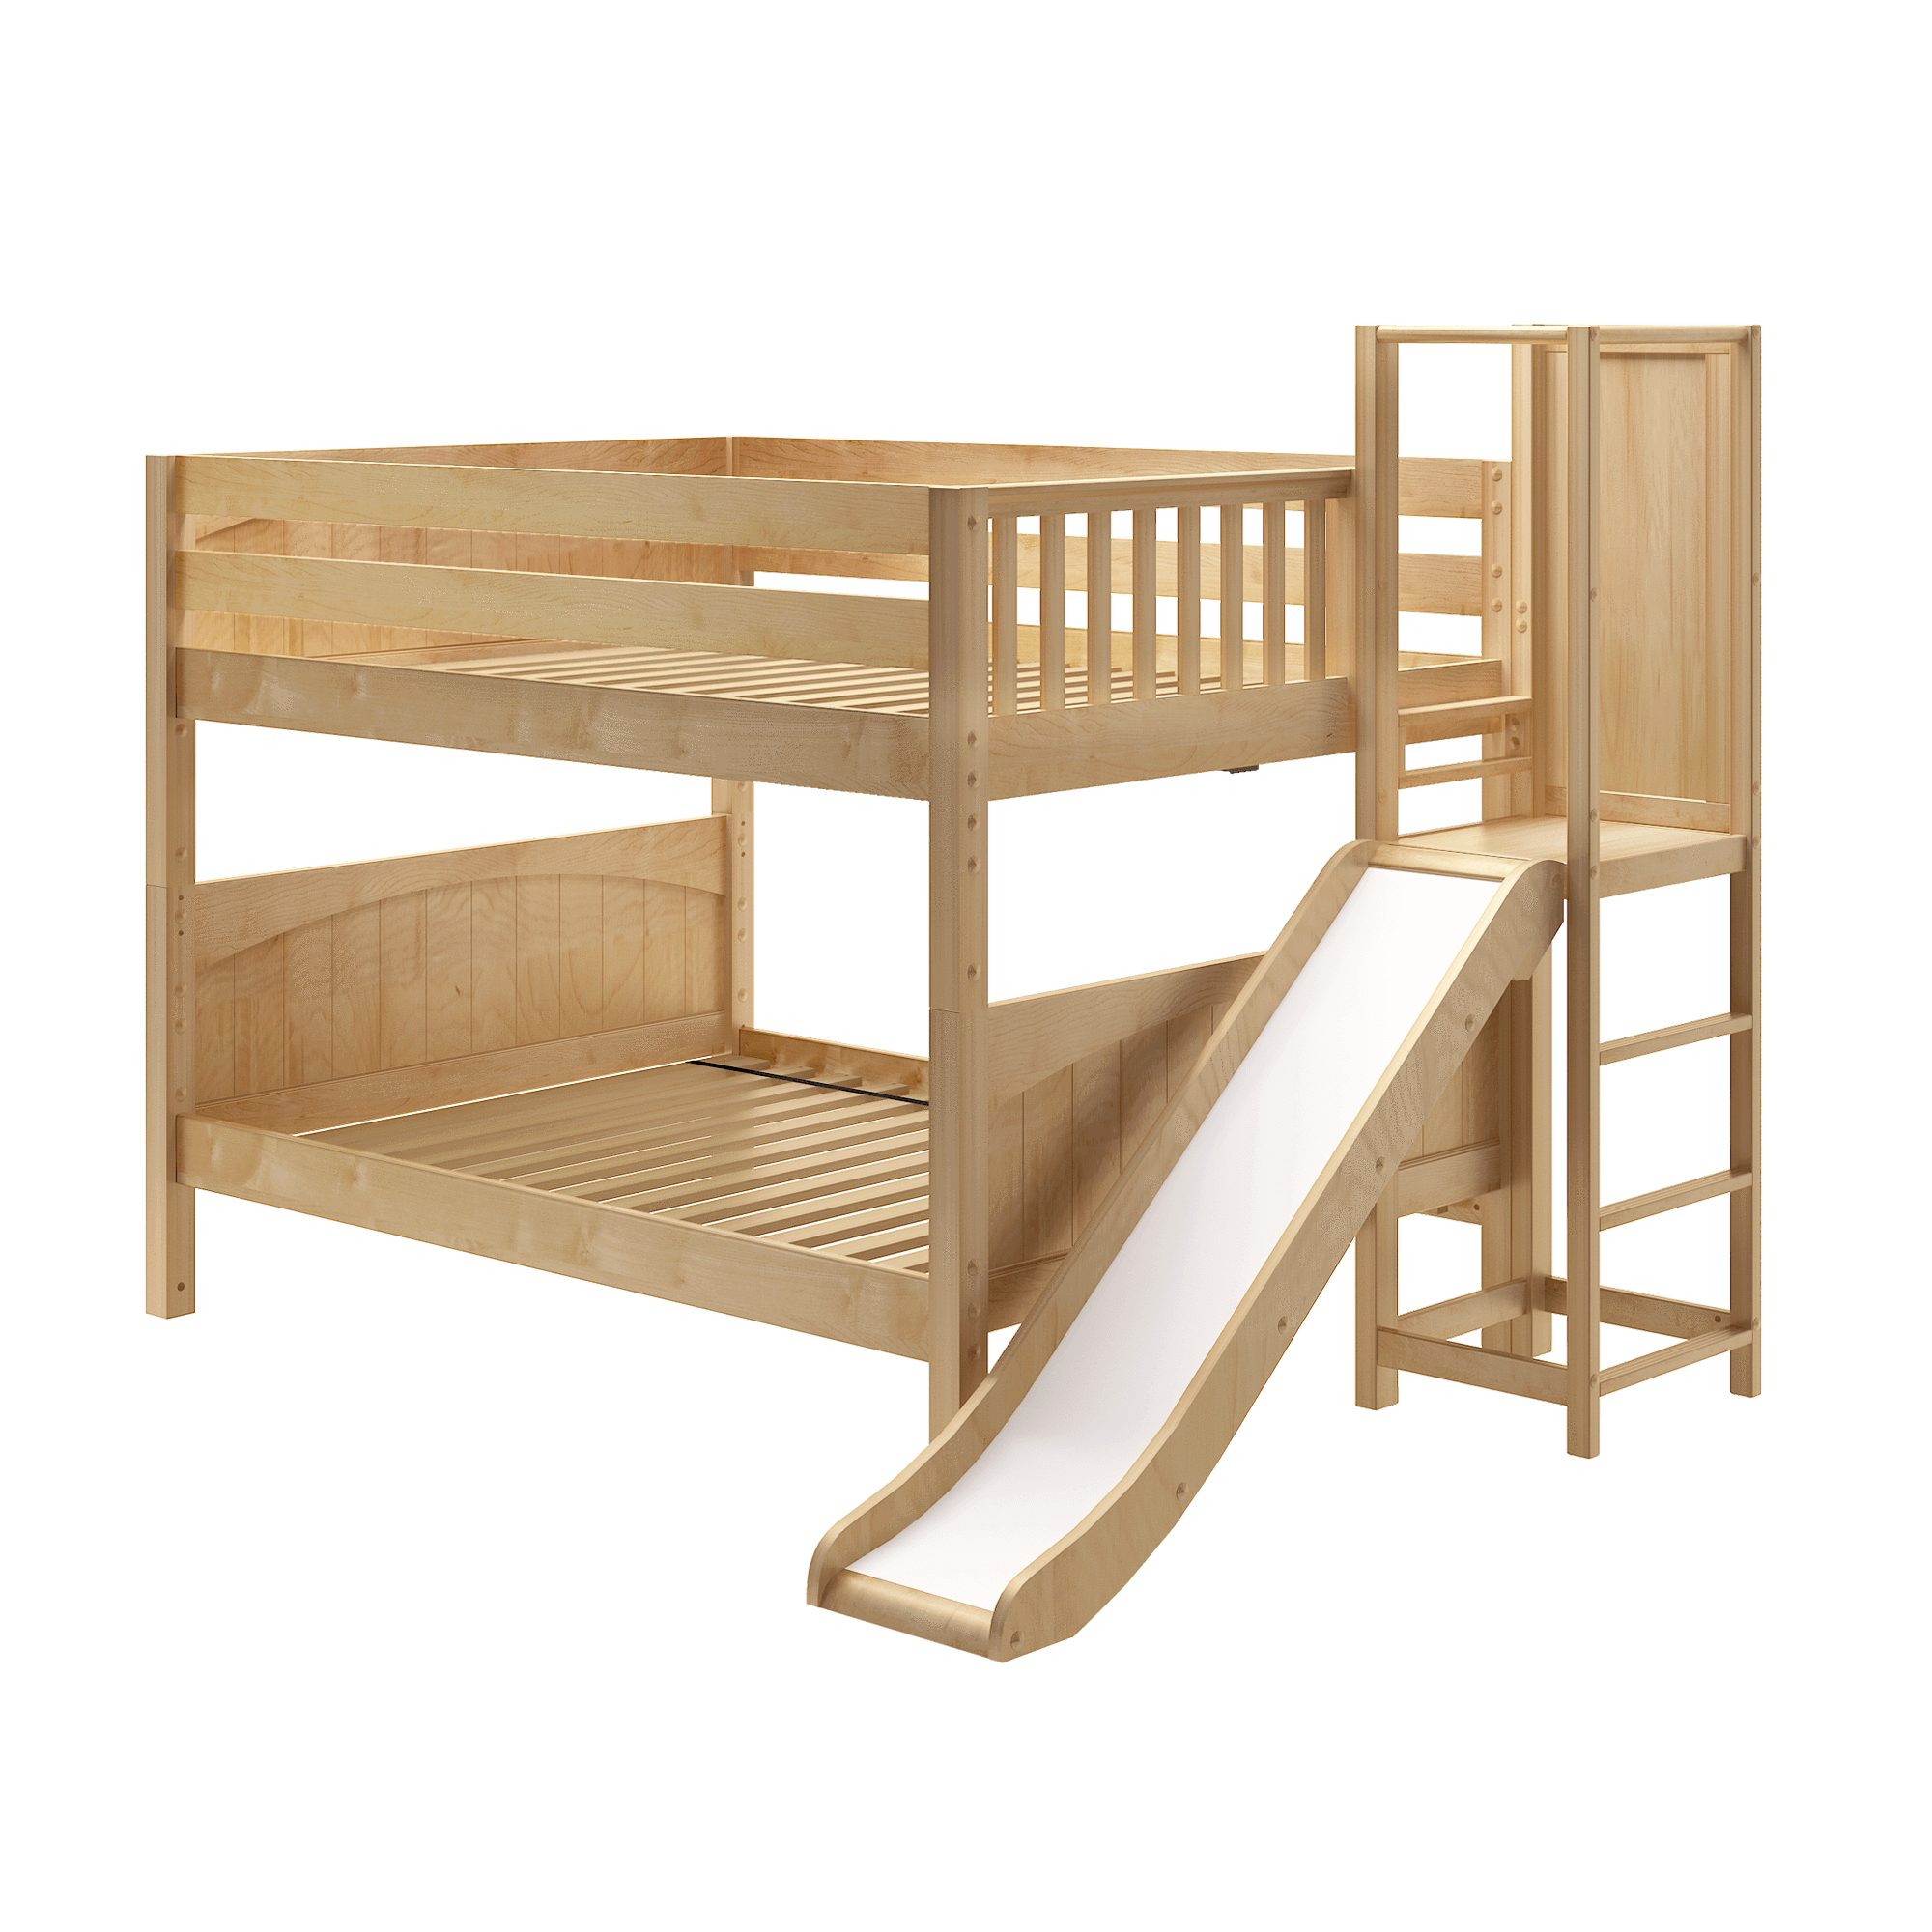 Maxtrix Full Low Bunk Bed with Slide Platform